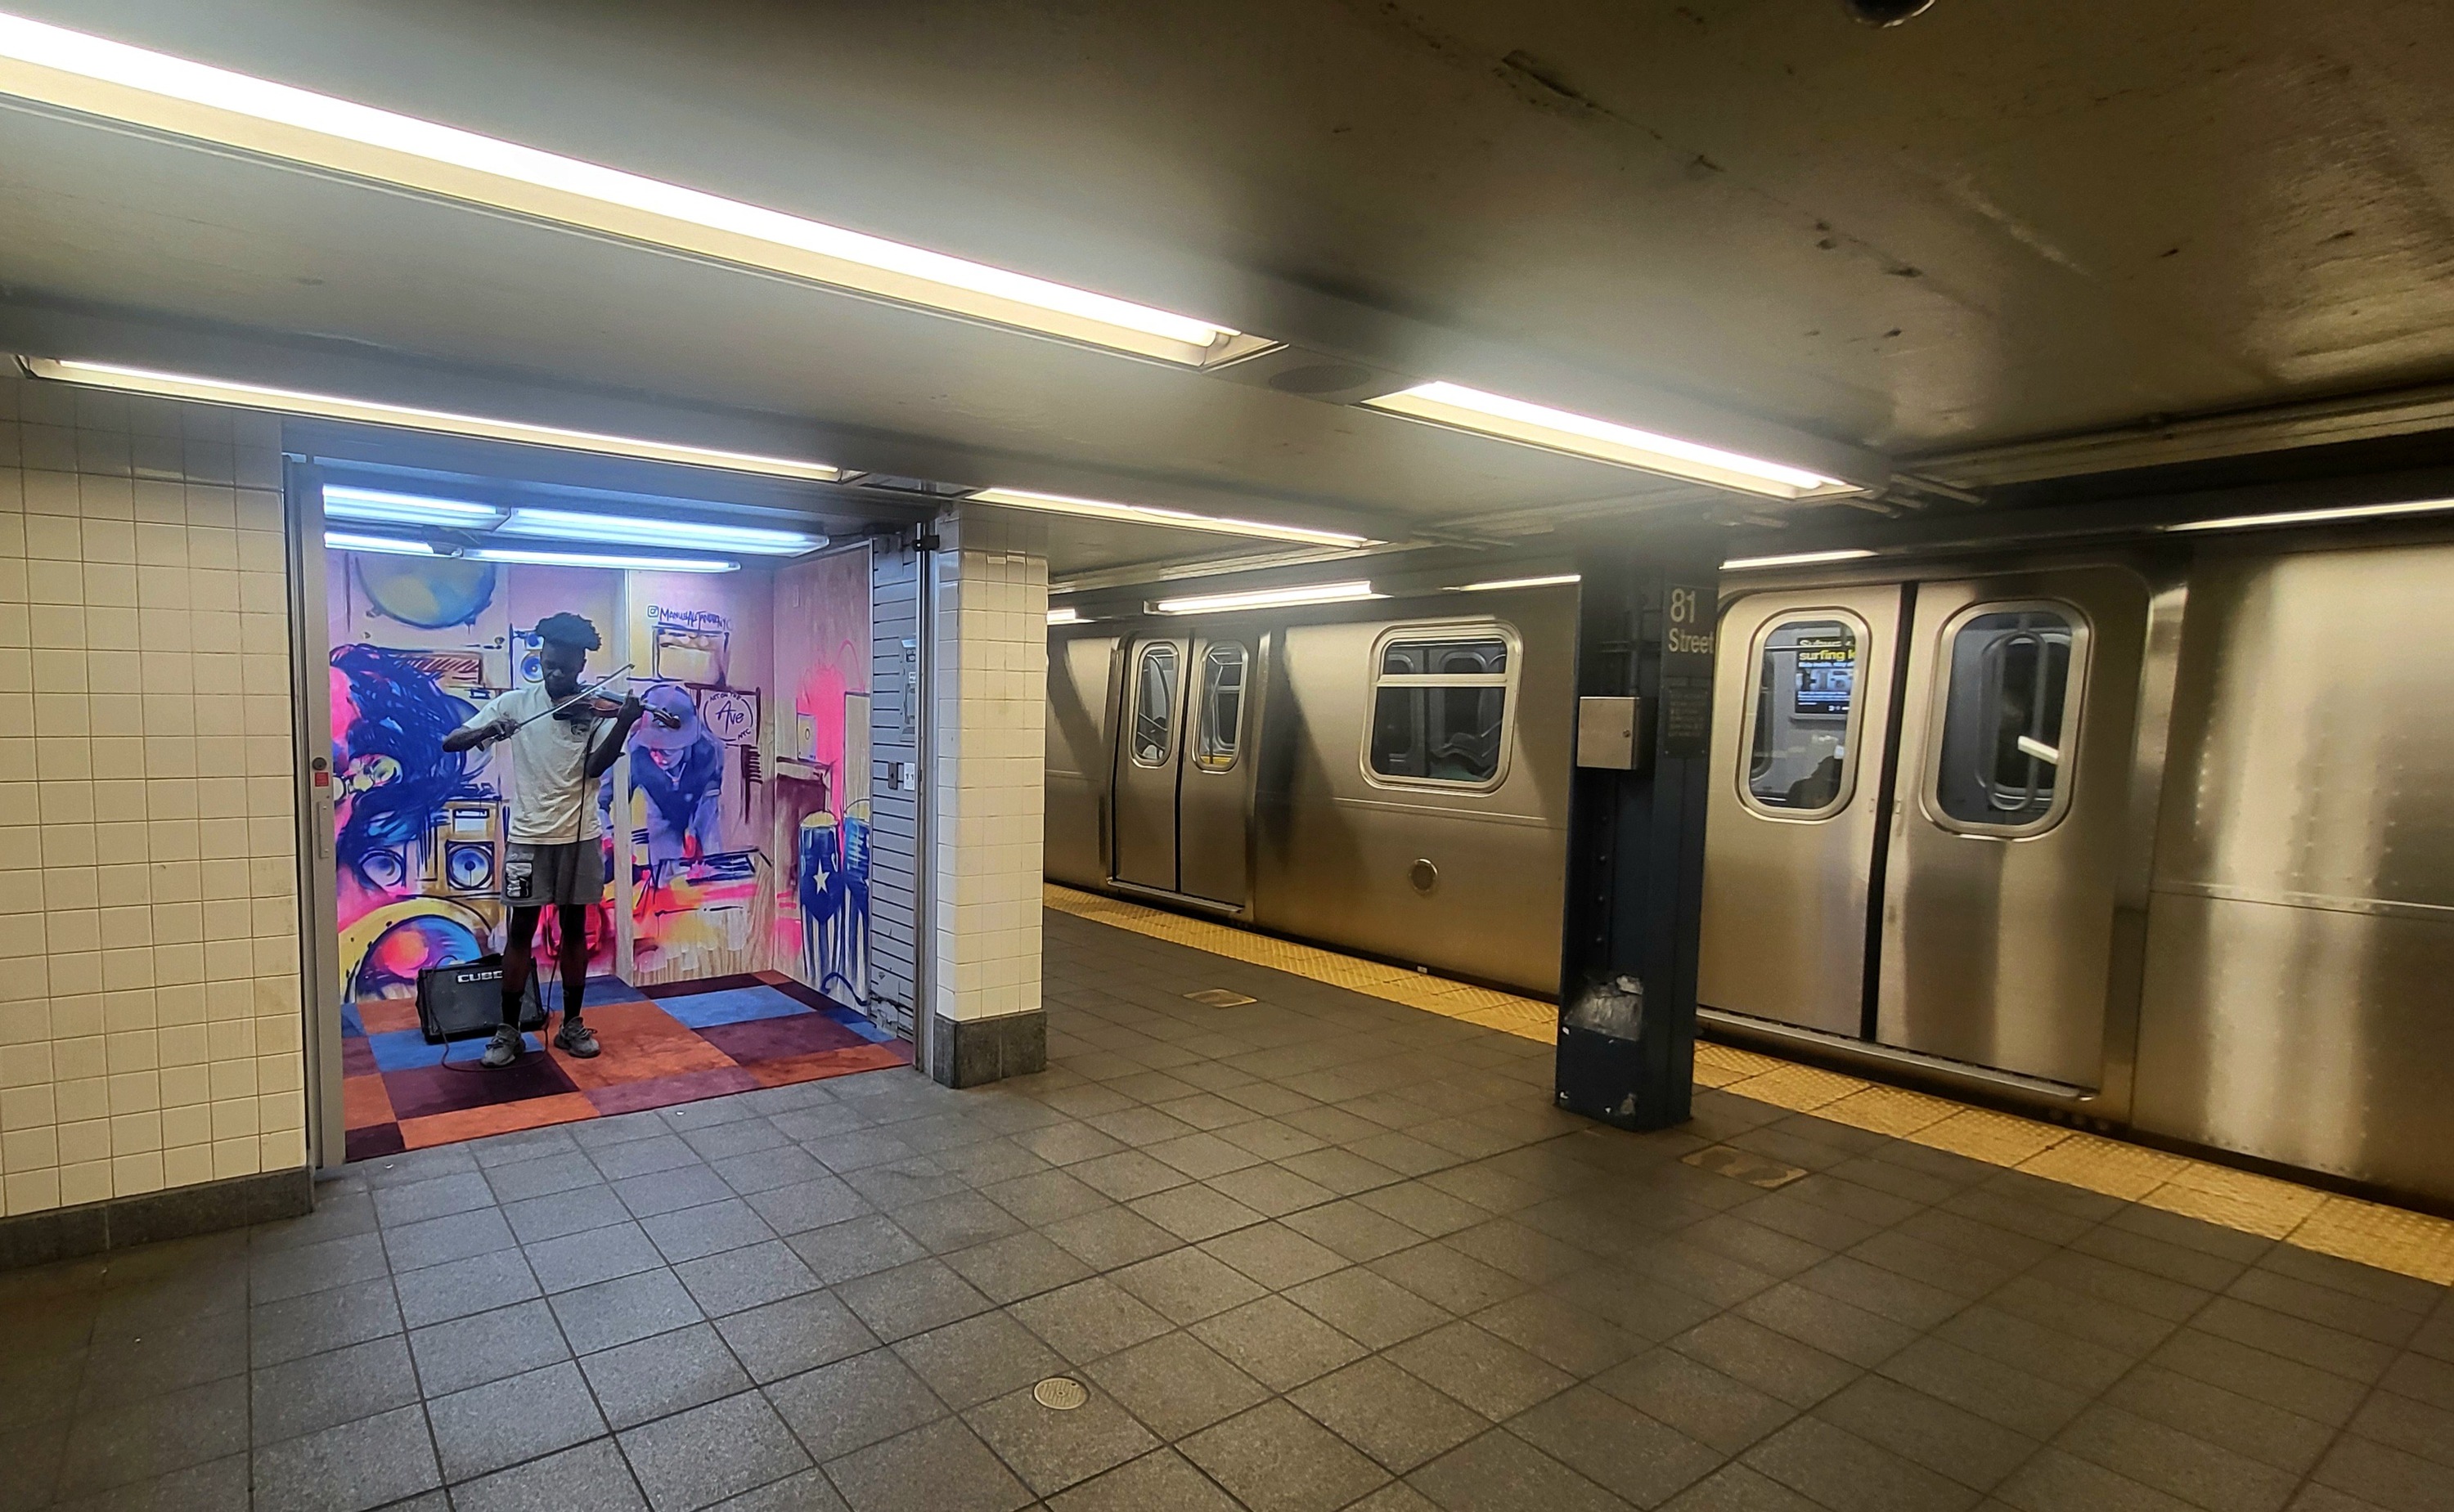 81st Street subway sound booth